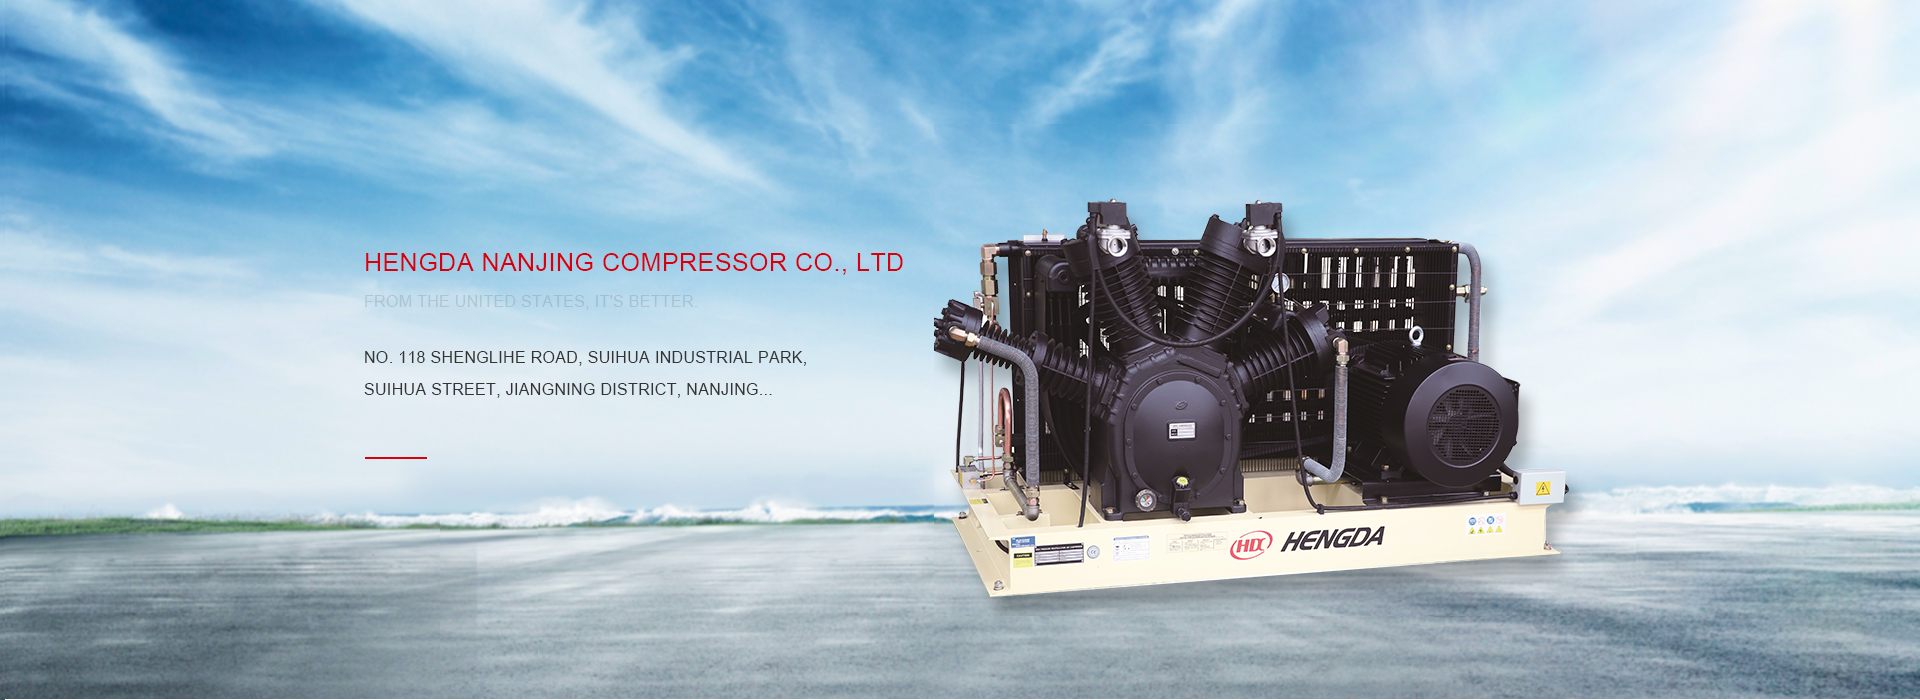 Hengda nanjing compressor co., LTD